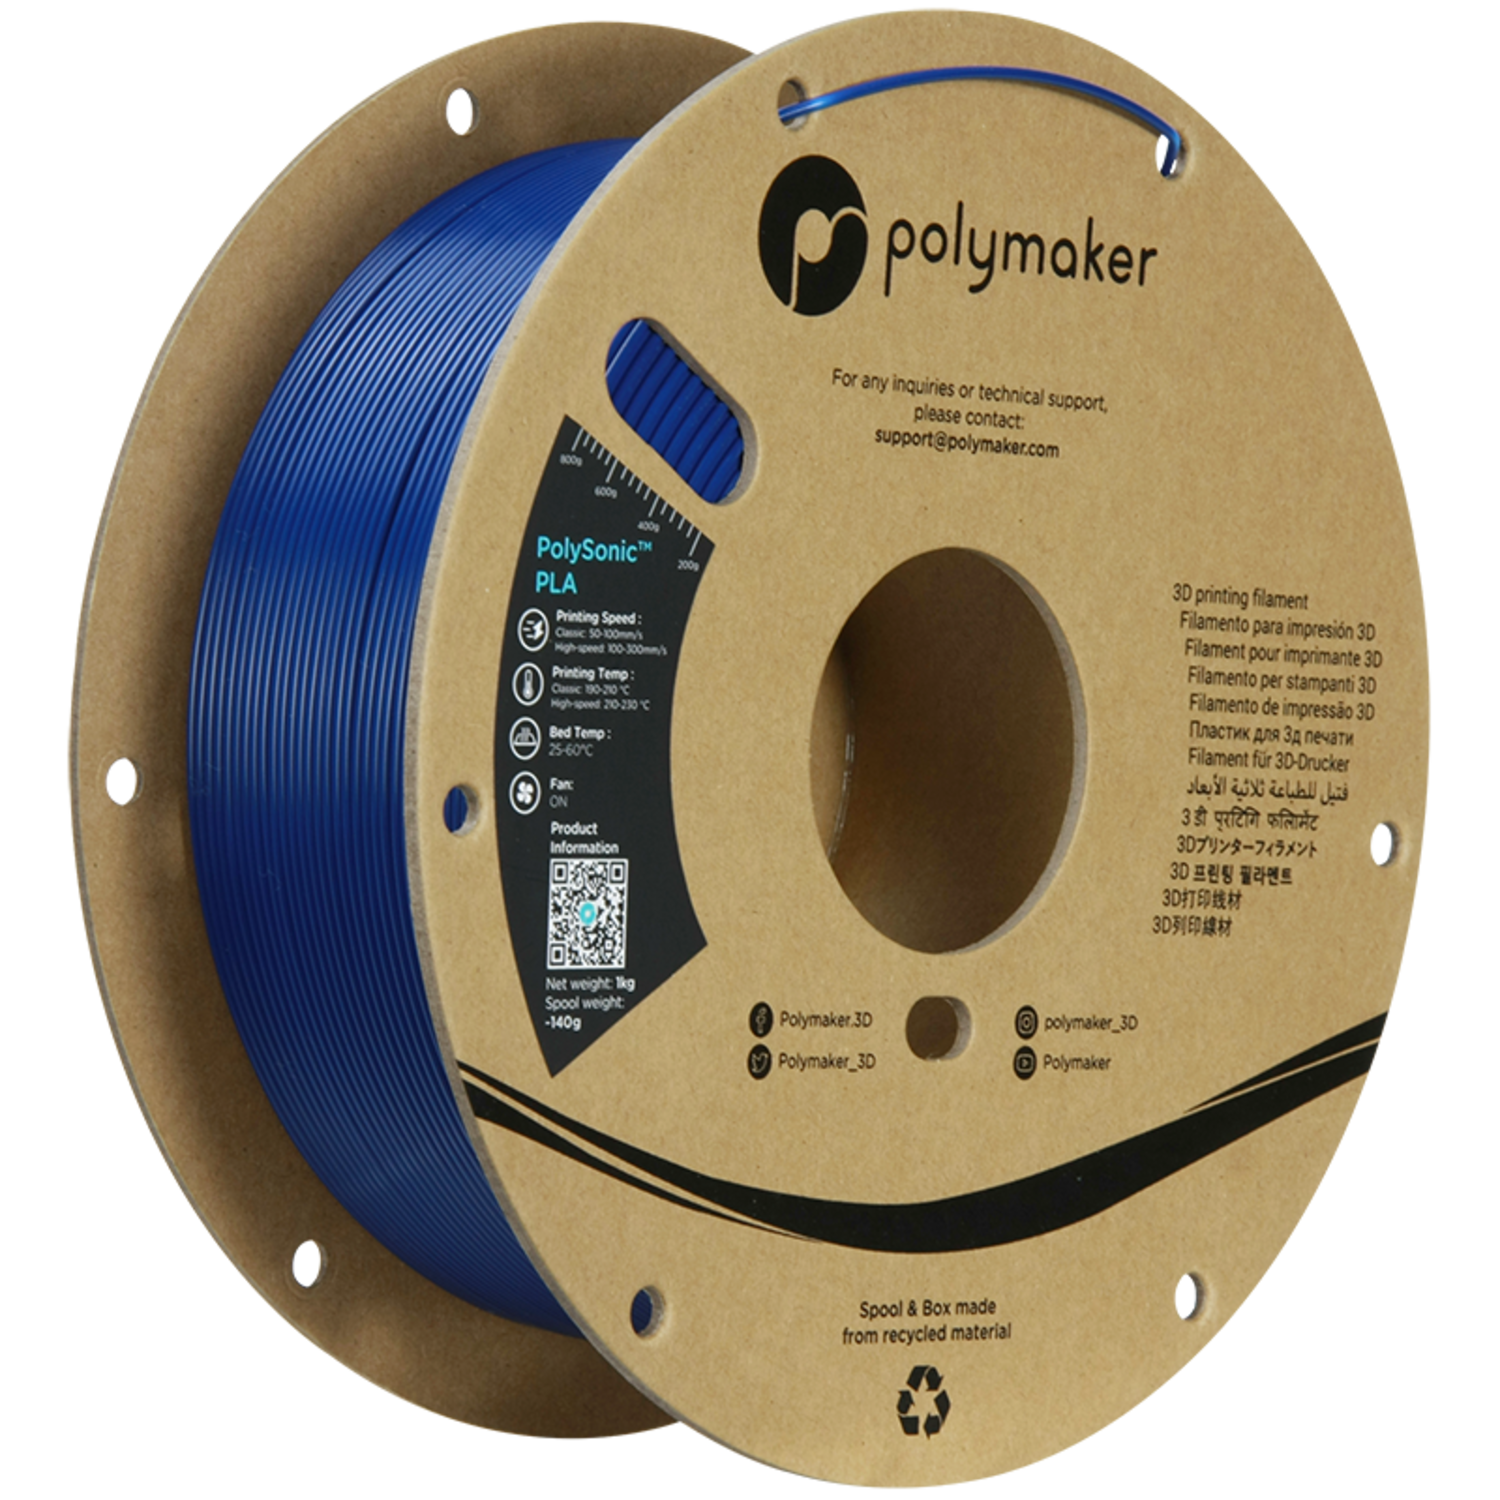 Polymaker PolySonic™ PLA - High Speed PLA - FilRight